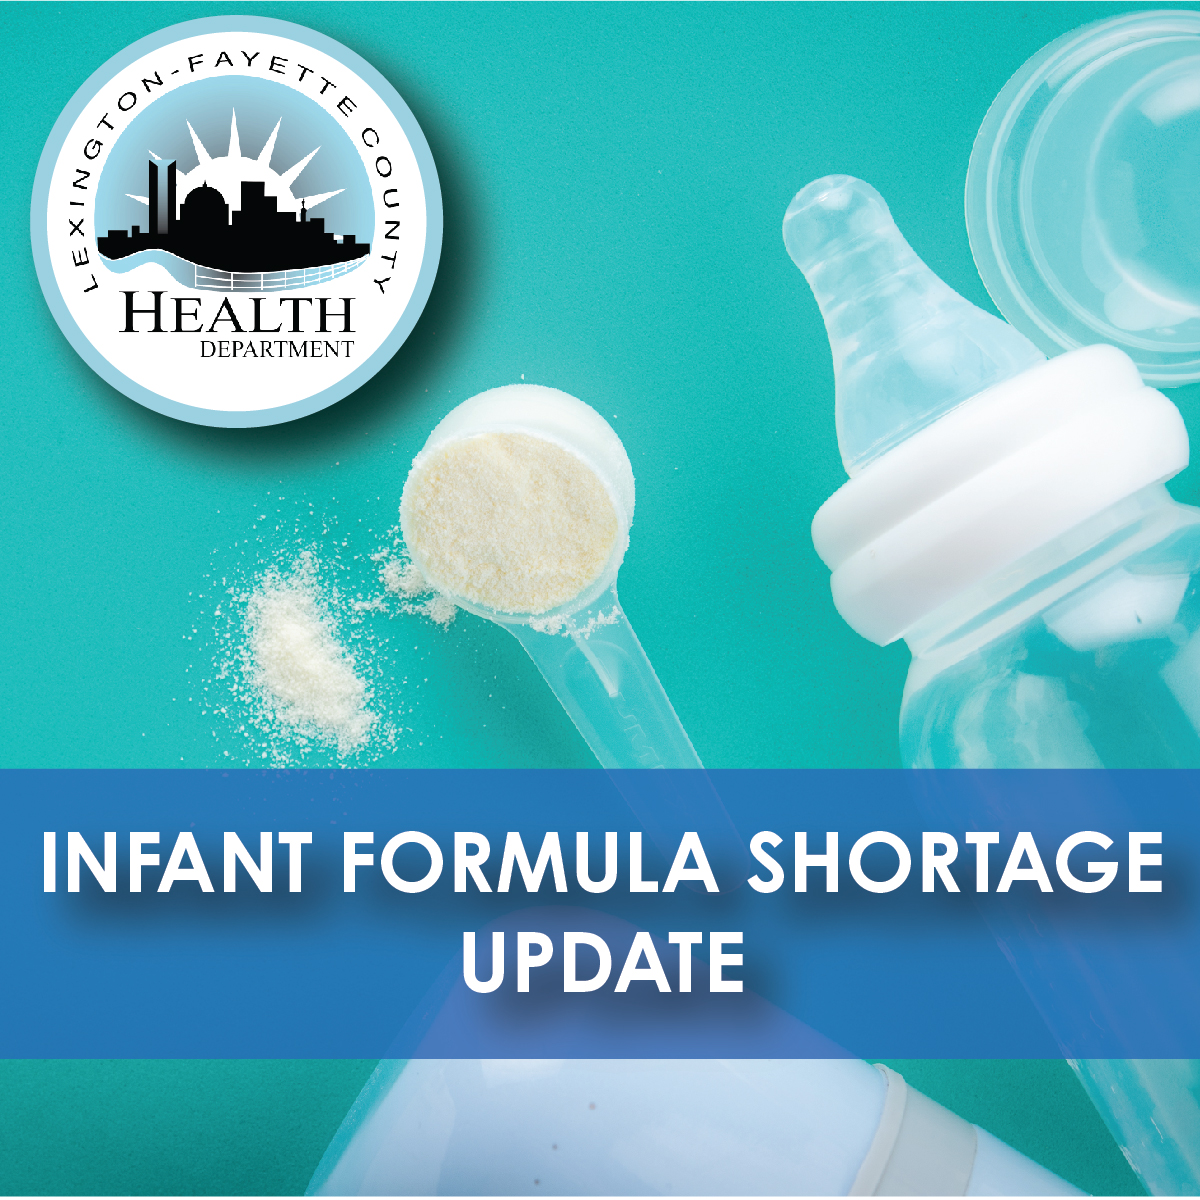 National formula shortage update